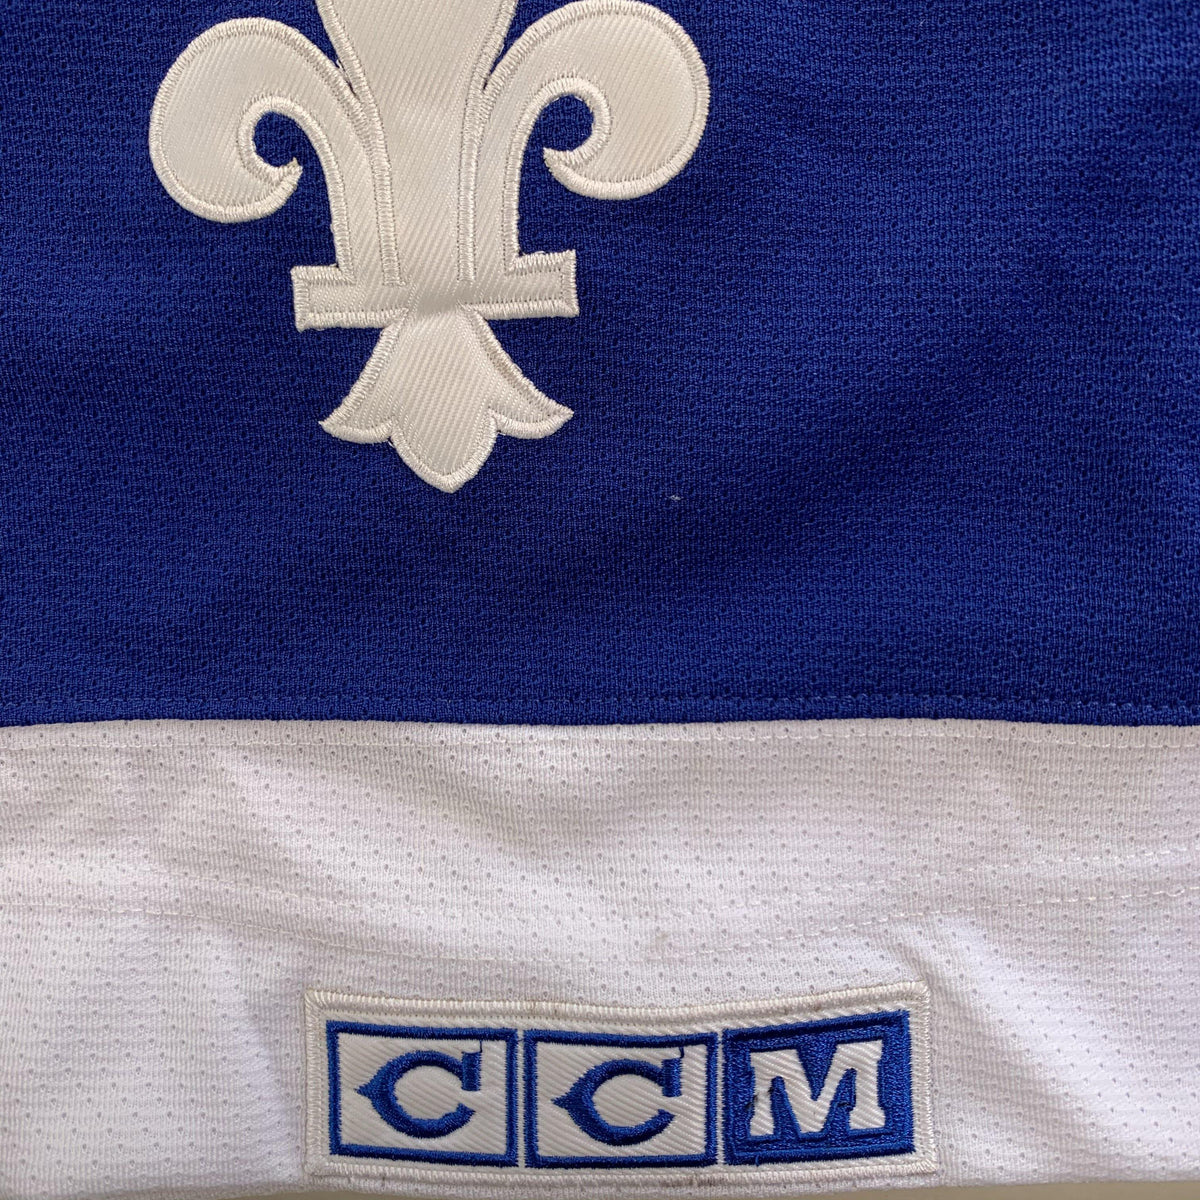 Vintage Quebec Nordiques “Peter Forsberg” CCM Jersey - jointcustodydc